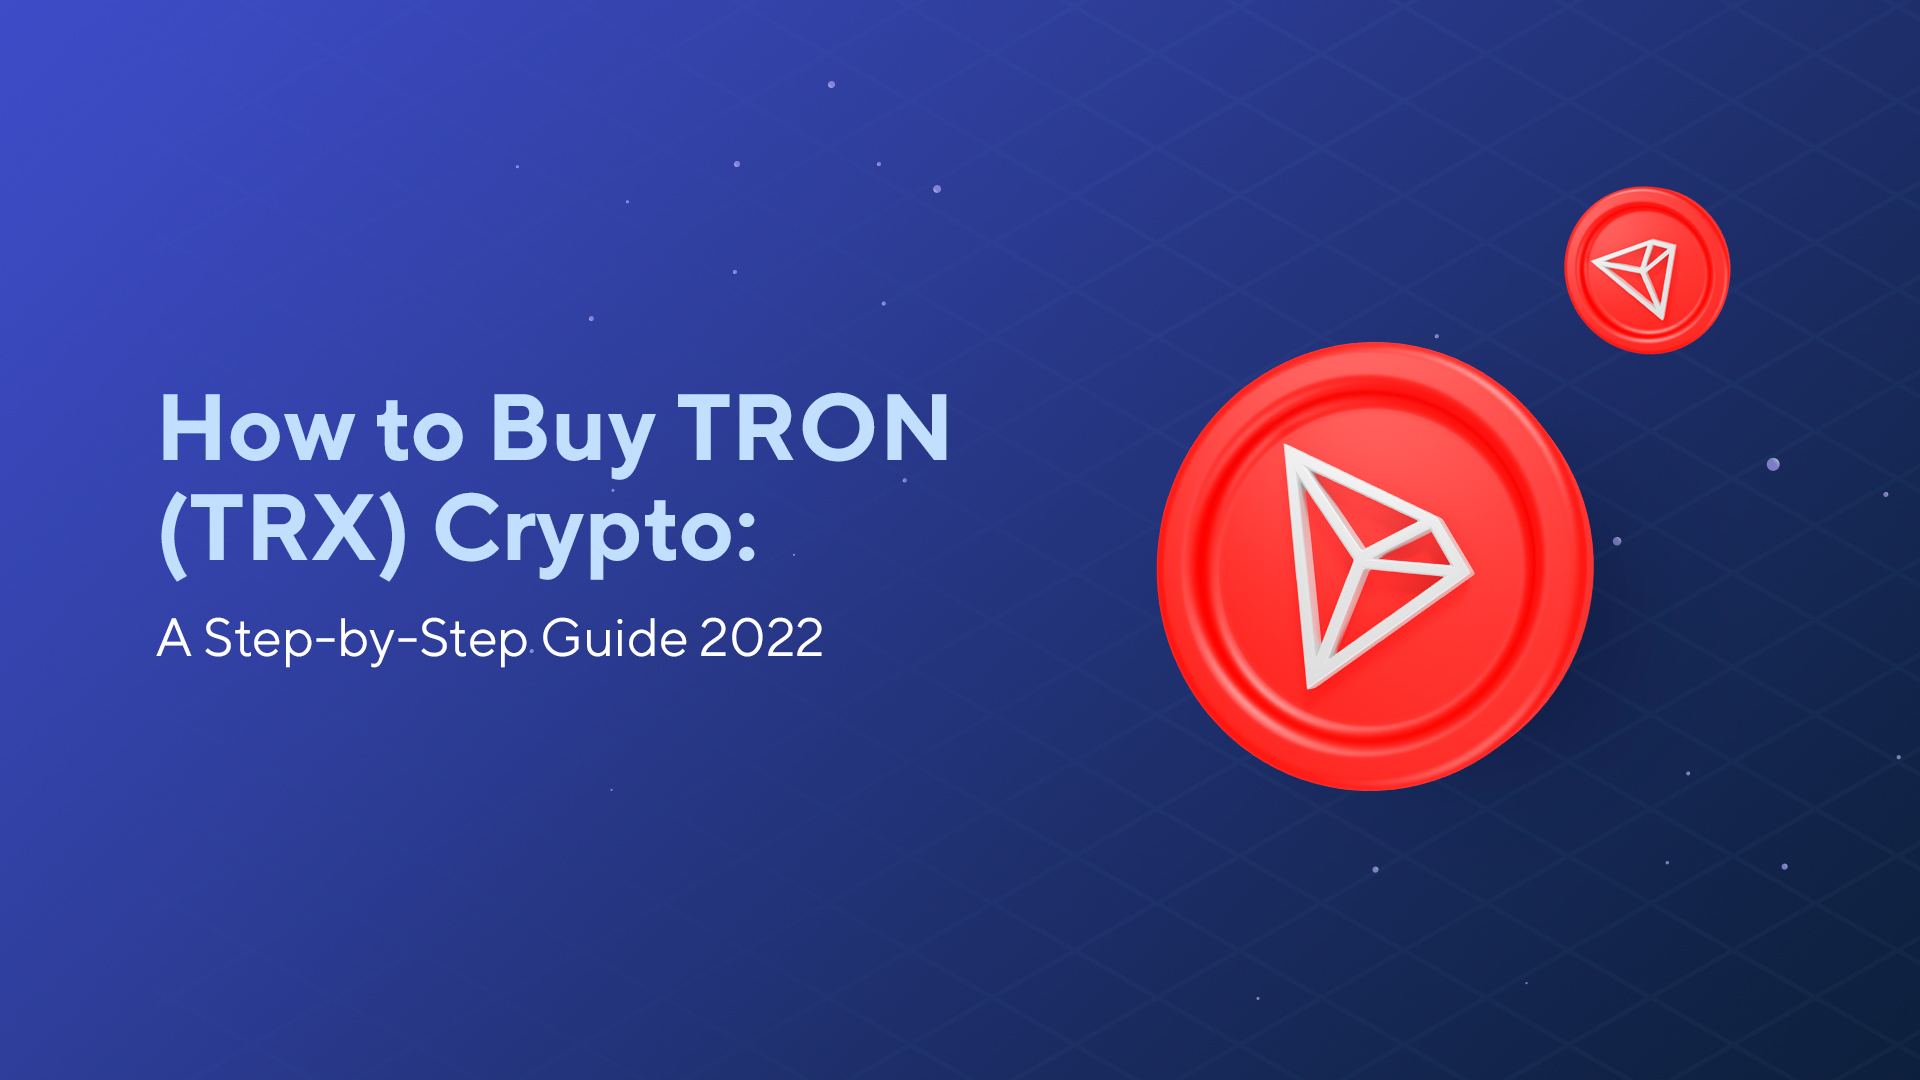 Where to buy tron crypto mercury crypto price